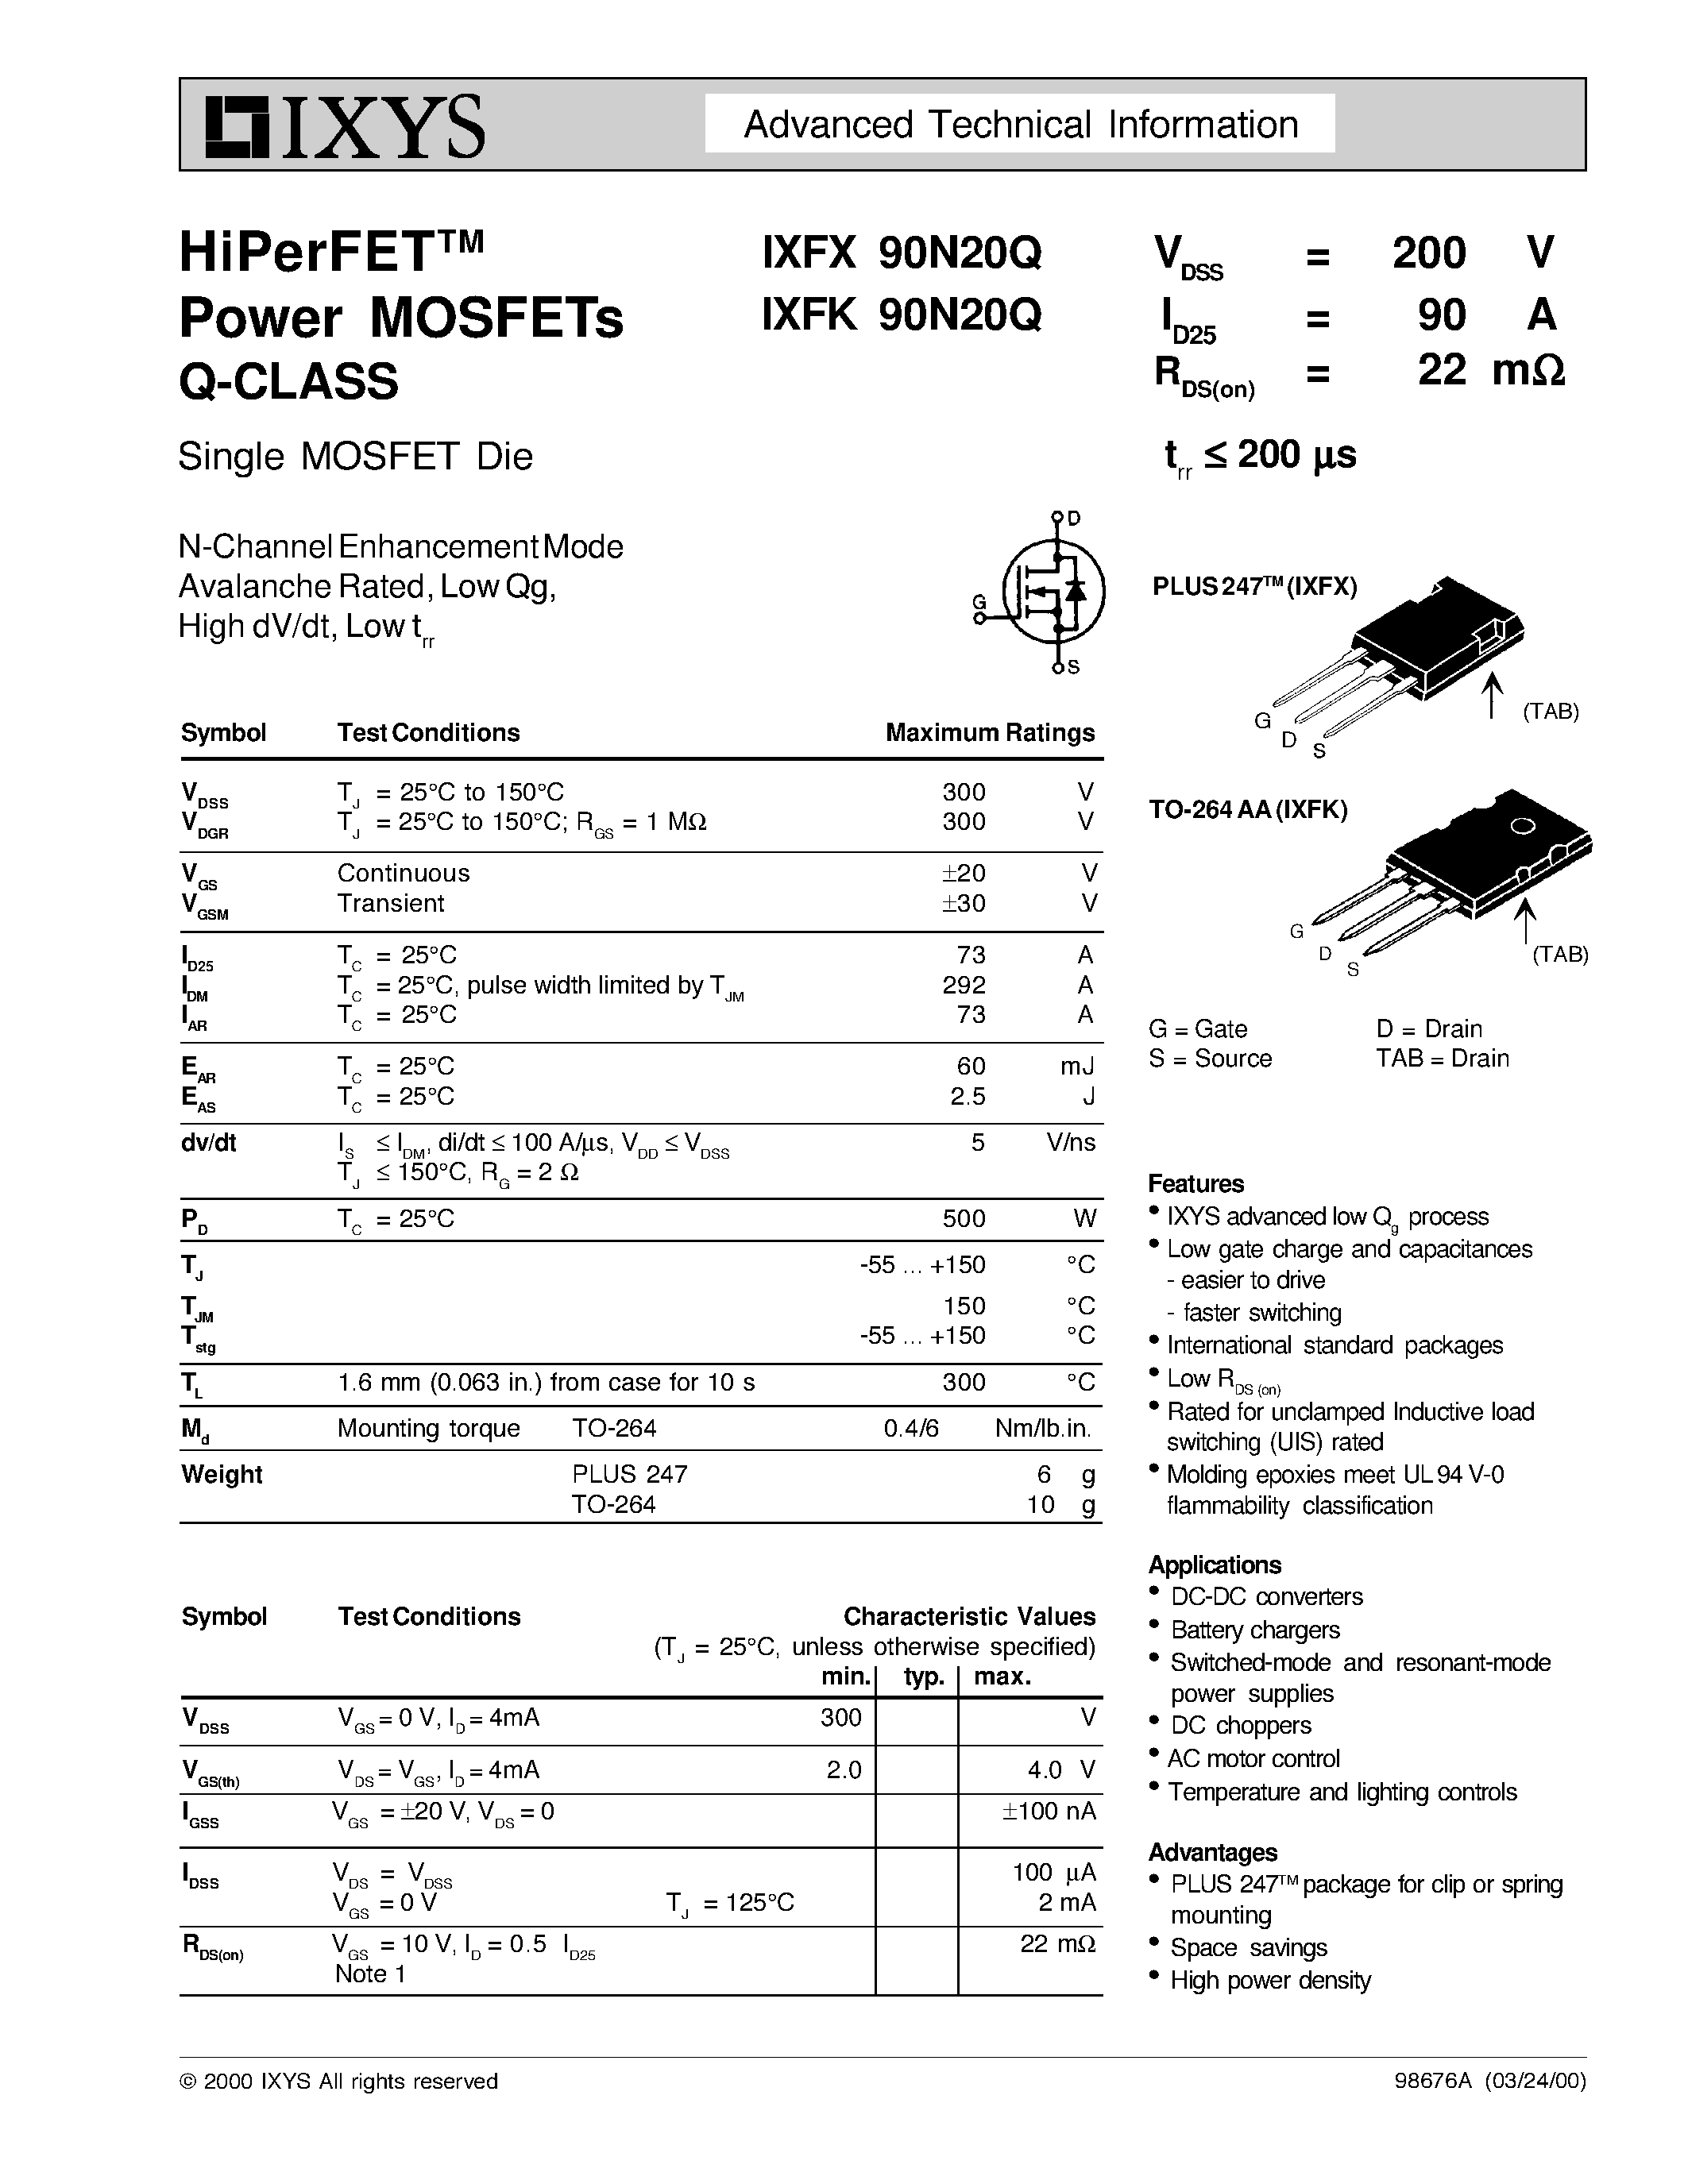 Datasheet IXFK90N20Q - HiPerFETTM Power MOSFETs Q-CLASS page 1